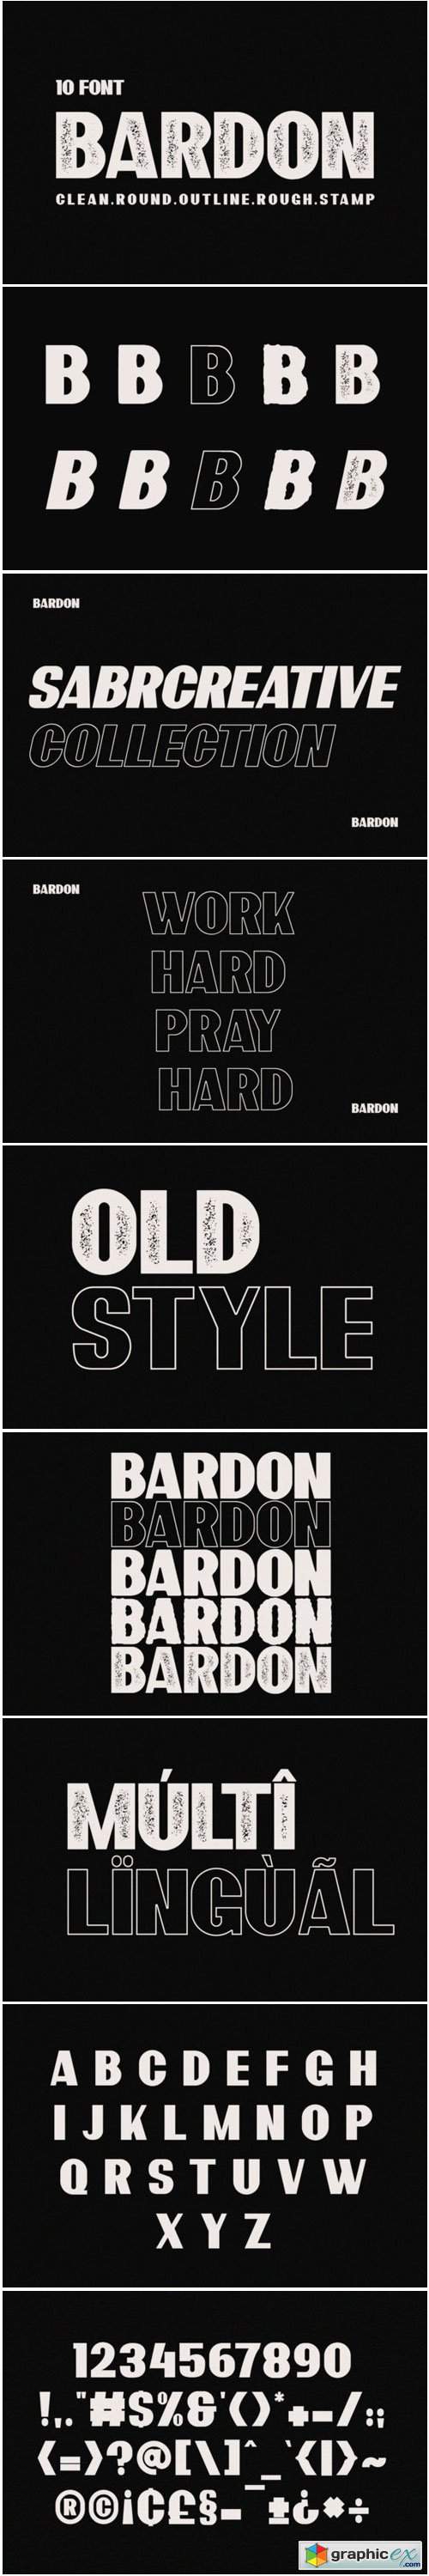 Bardon Font Family